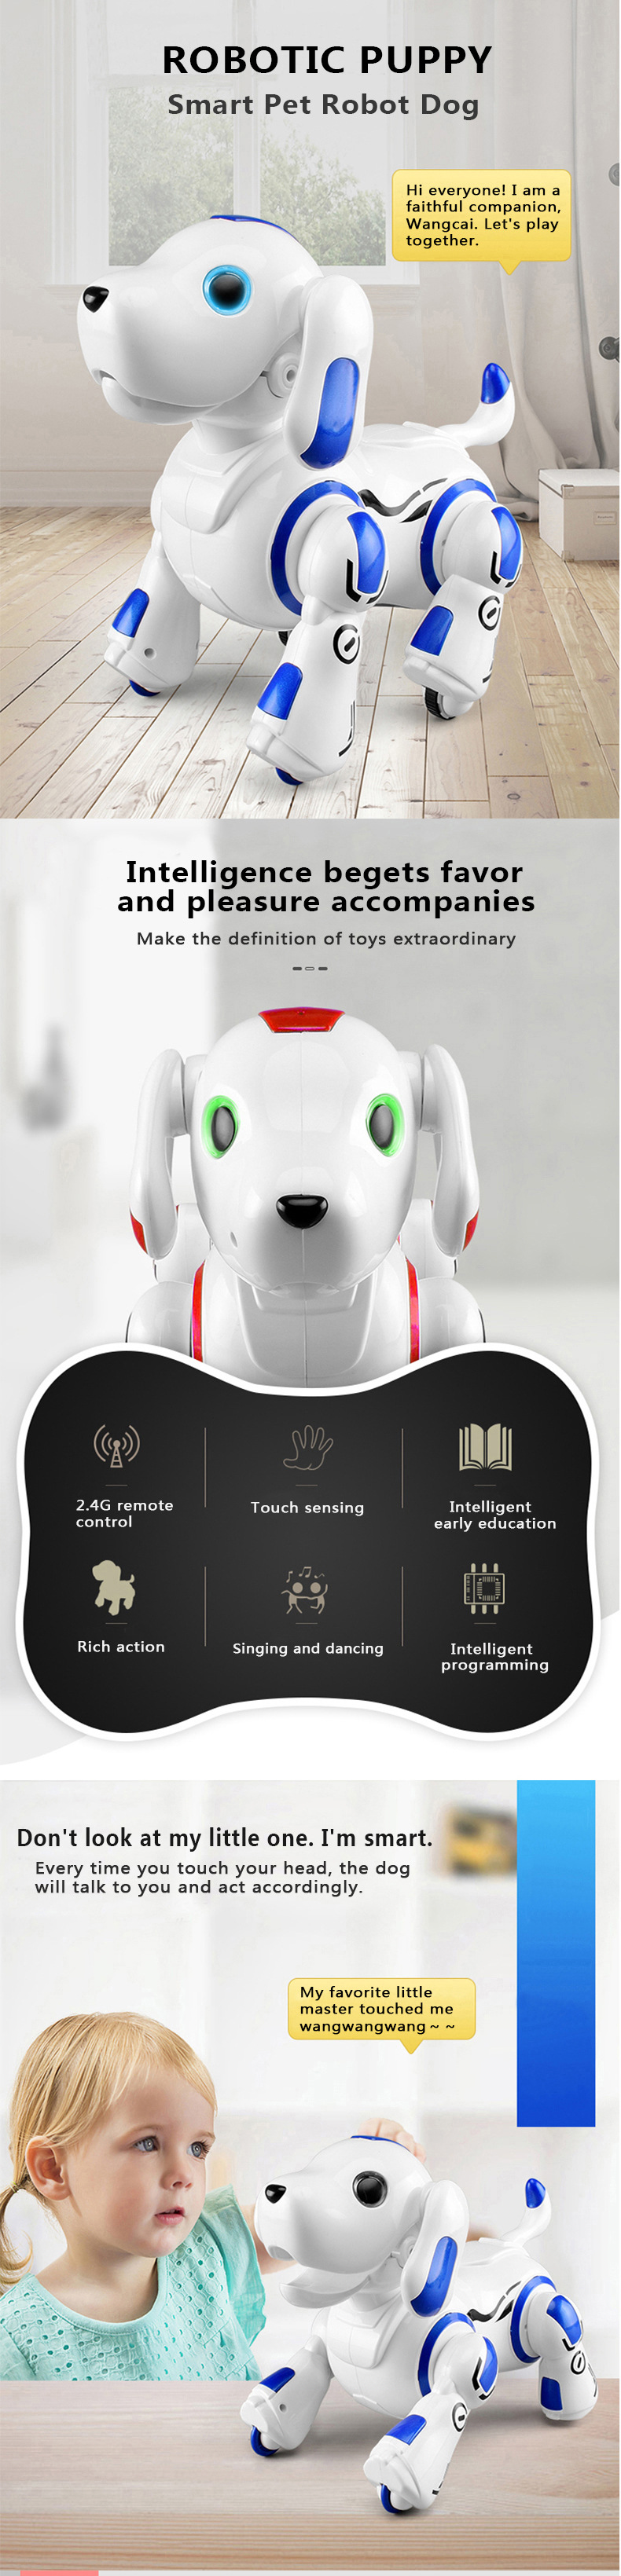 MoFun-24G-Remote-Programming-Touch-Sensing-Robotic-Puppy-Robot-Toy-1669319-1